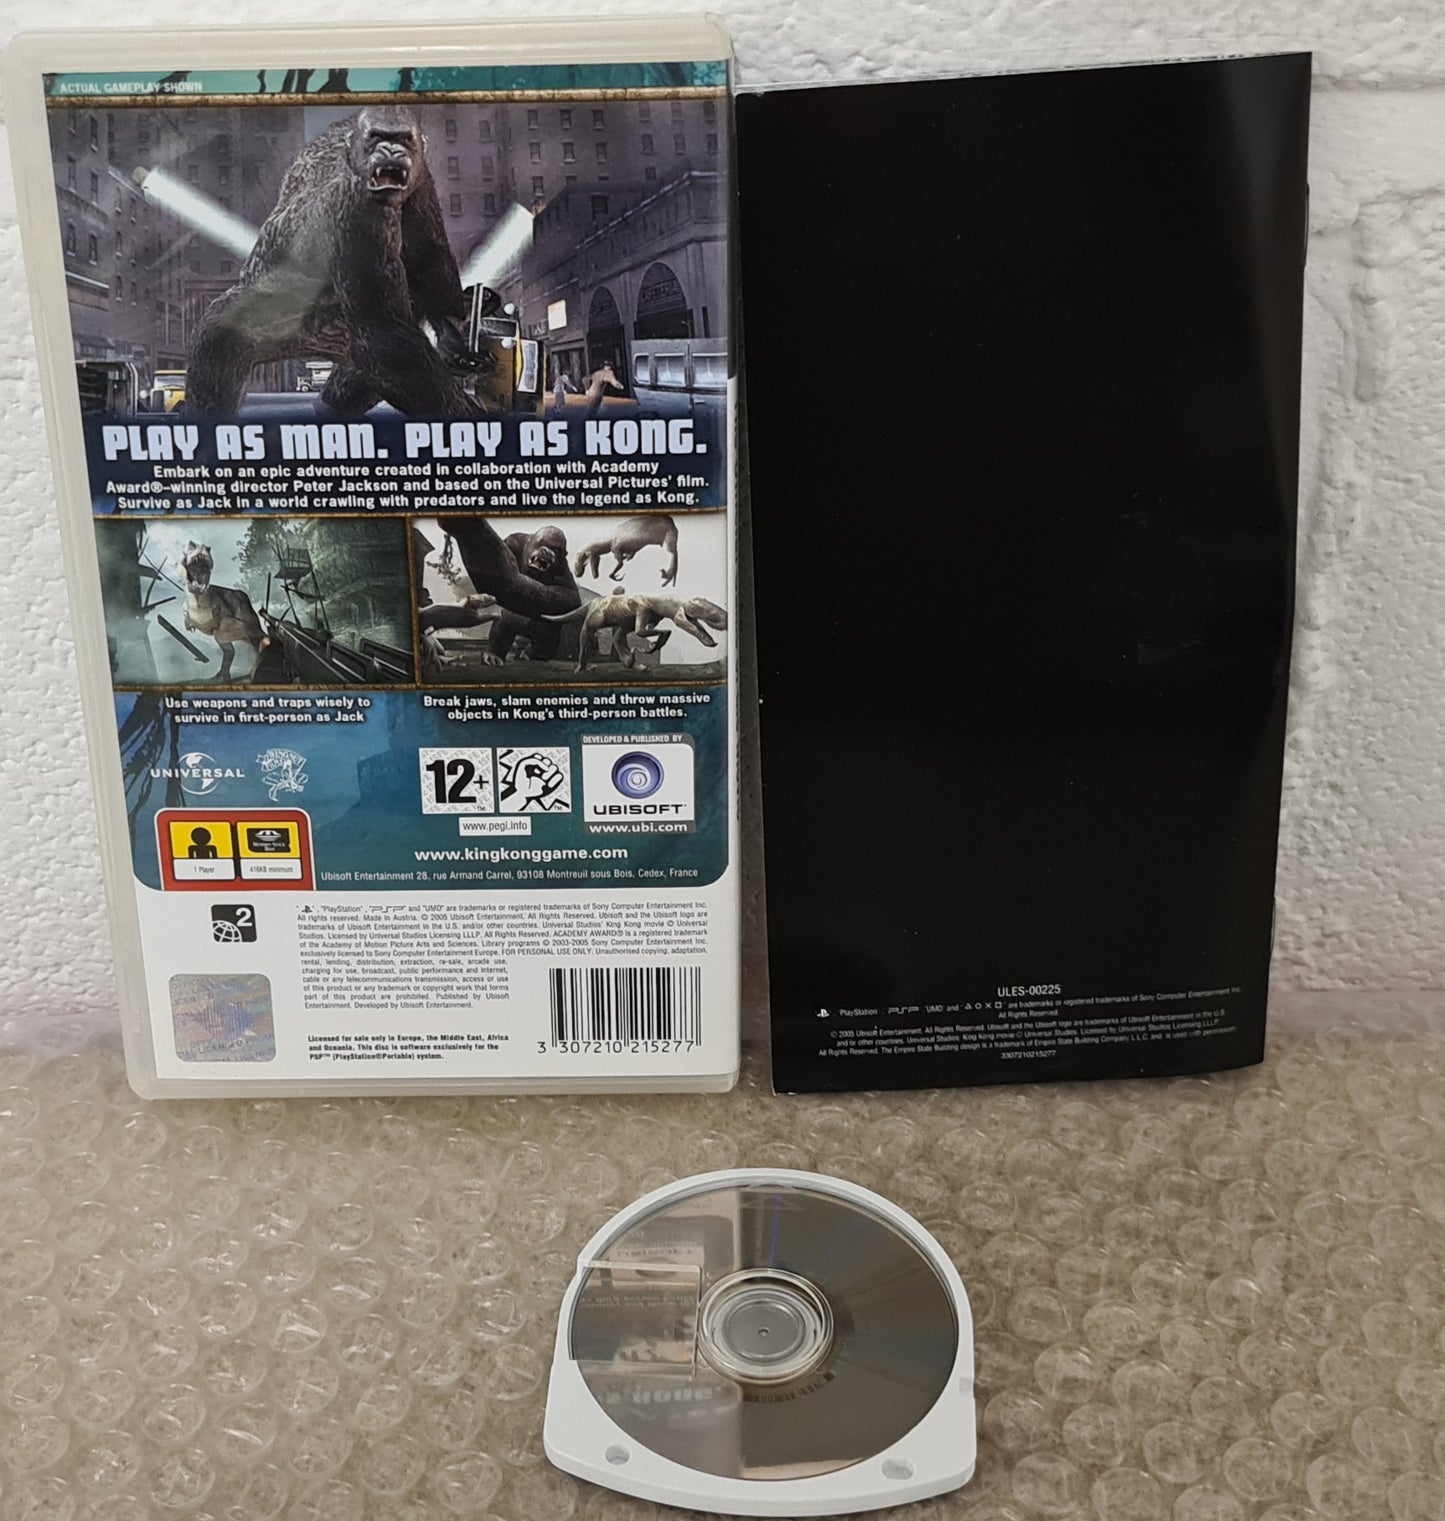 Peter Jackson's King Kong Sony PSP Game